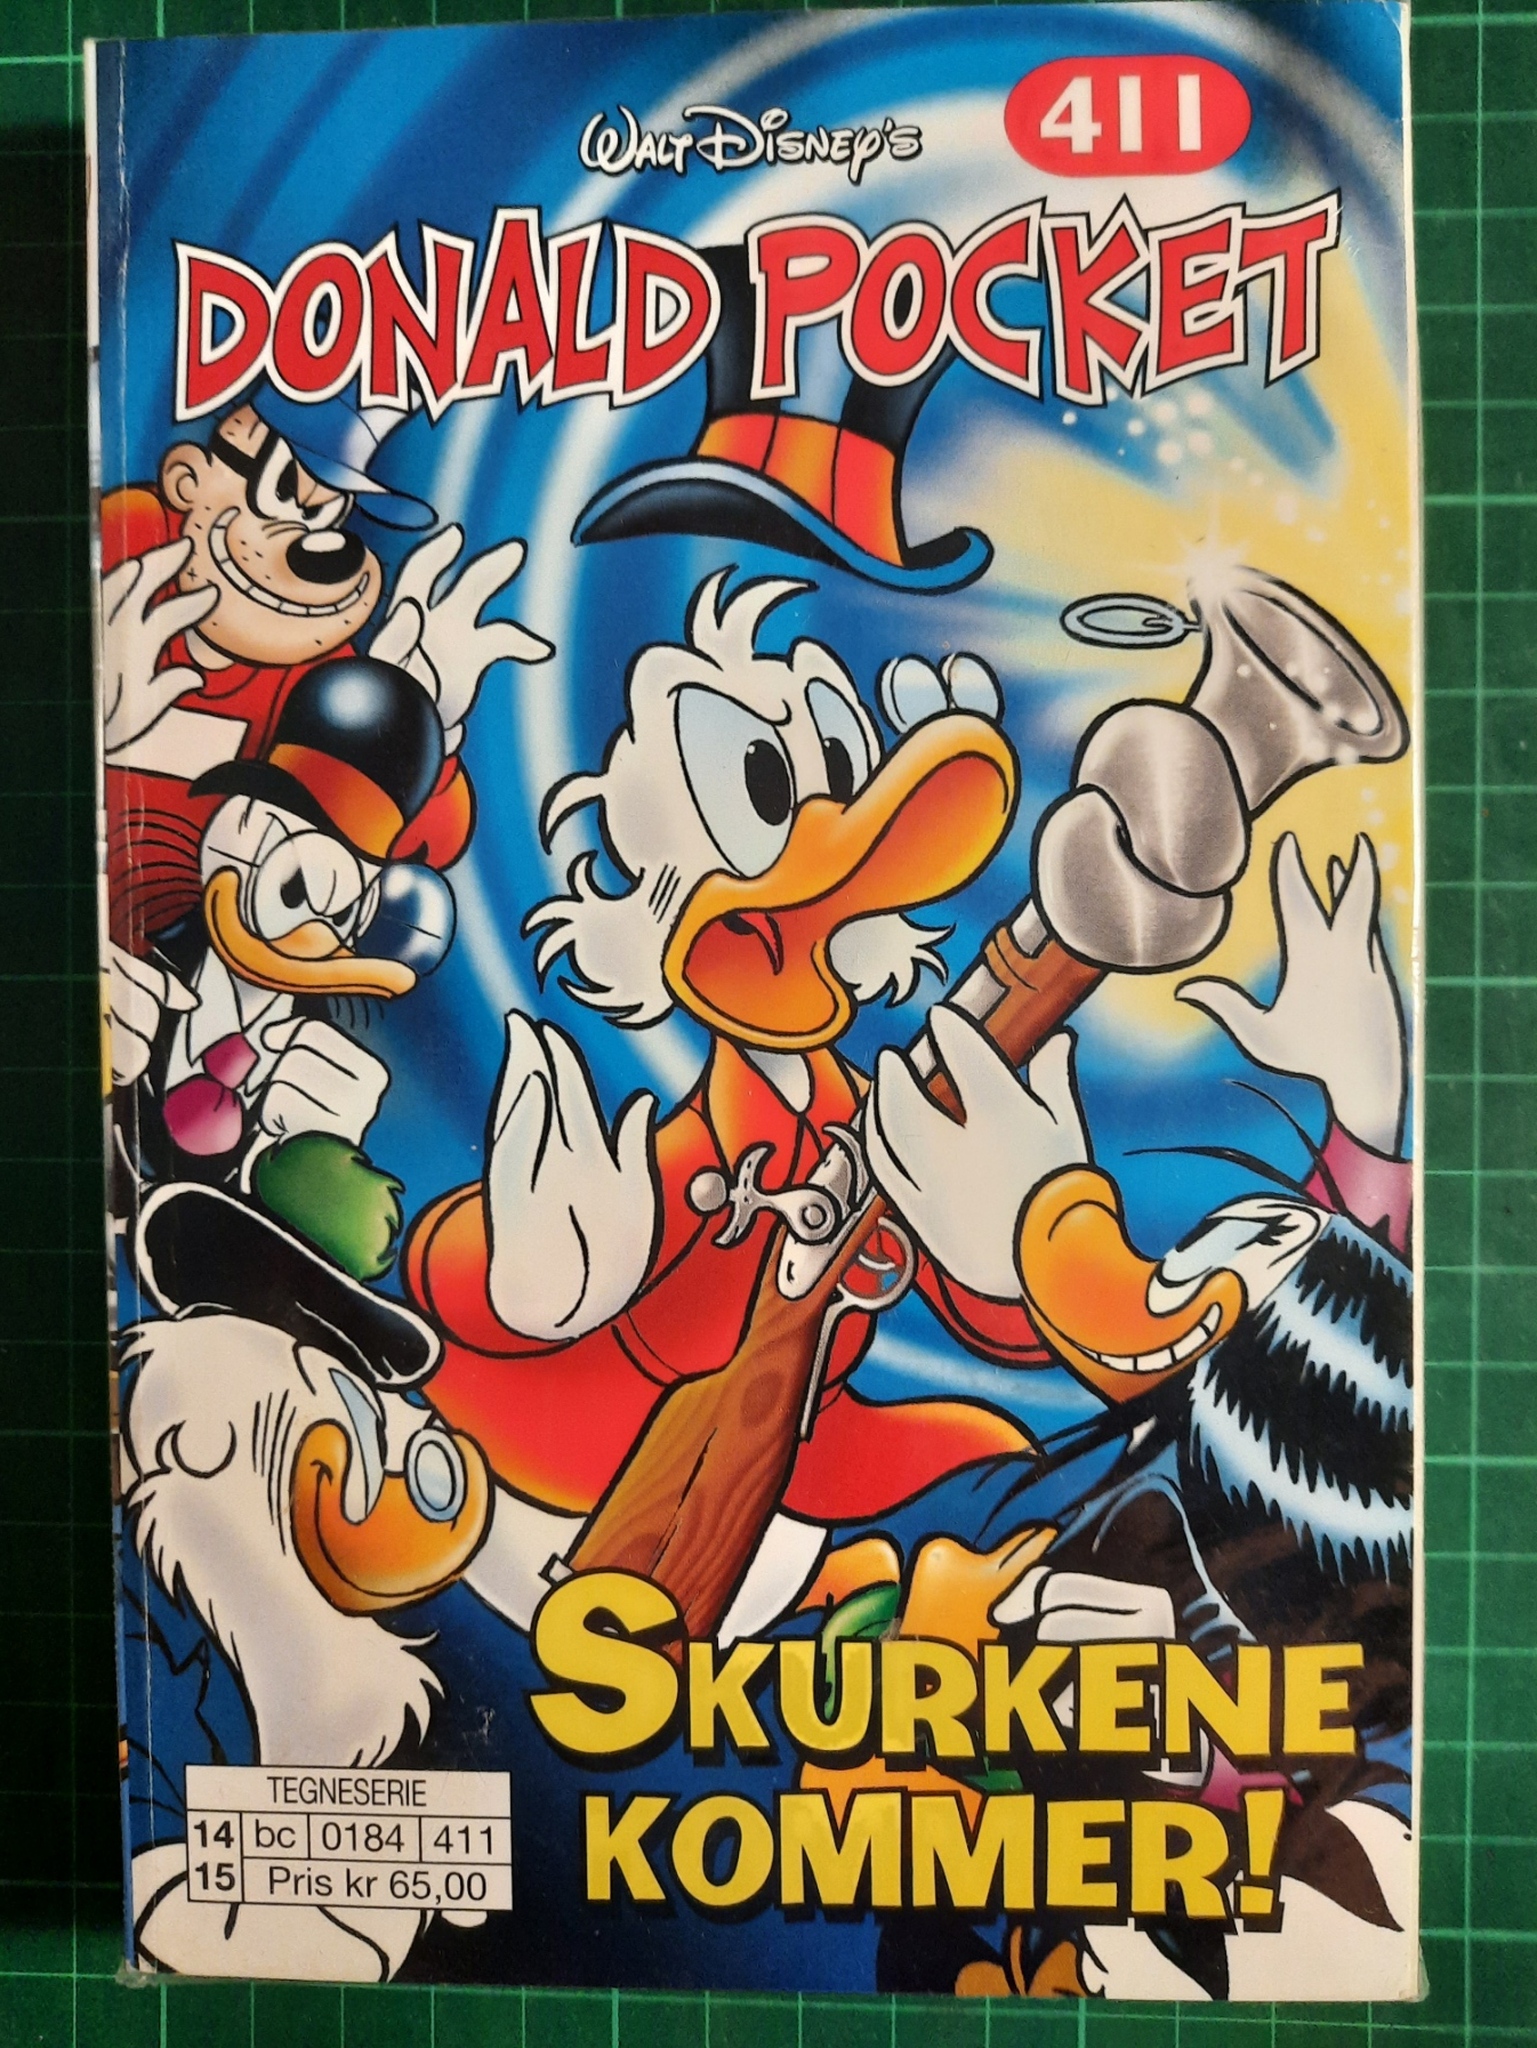 Donald Pocket 411